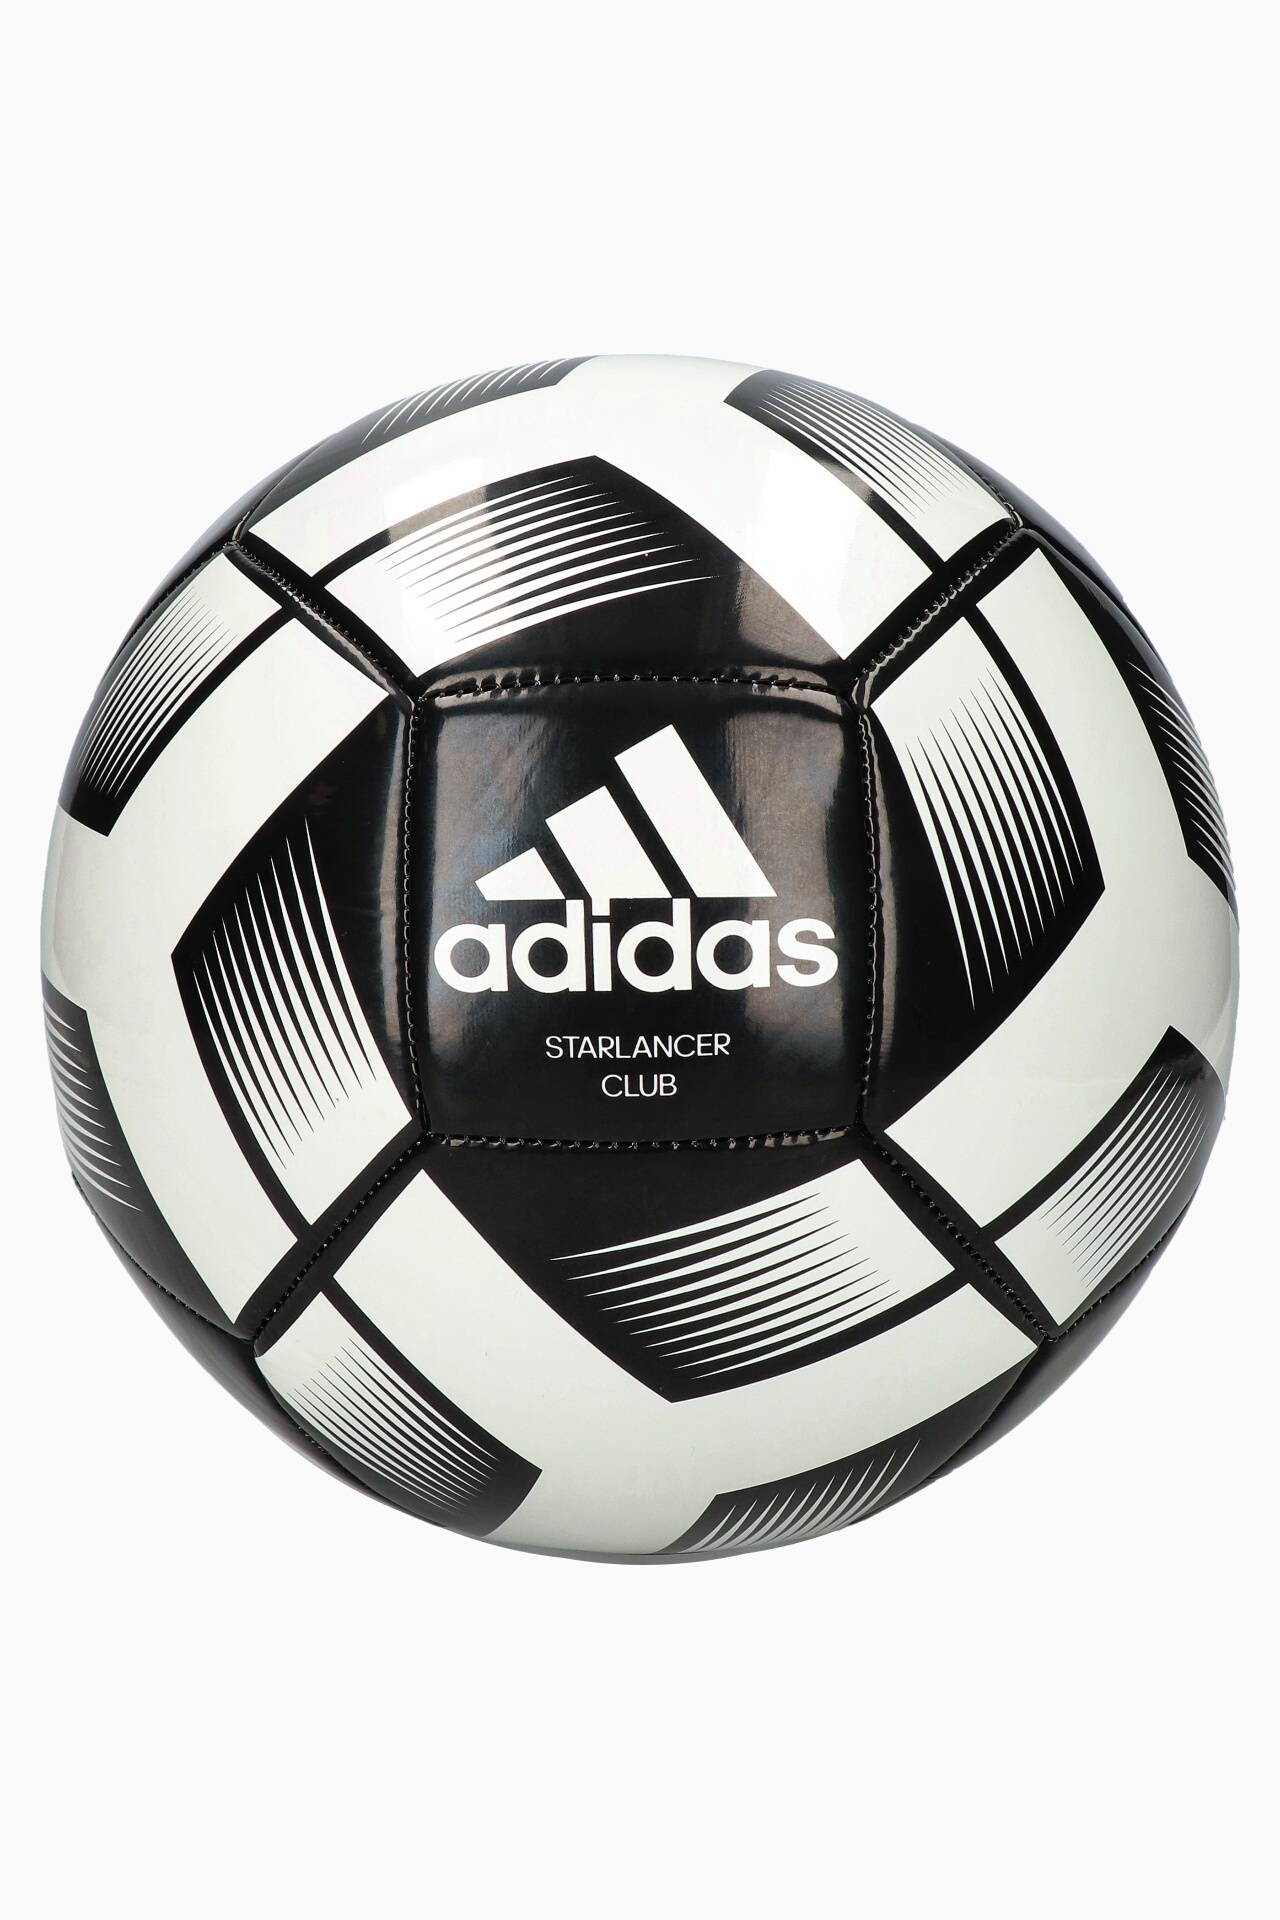 Ball adidas Starlancer size | - Football boots & equipment